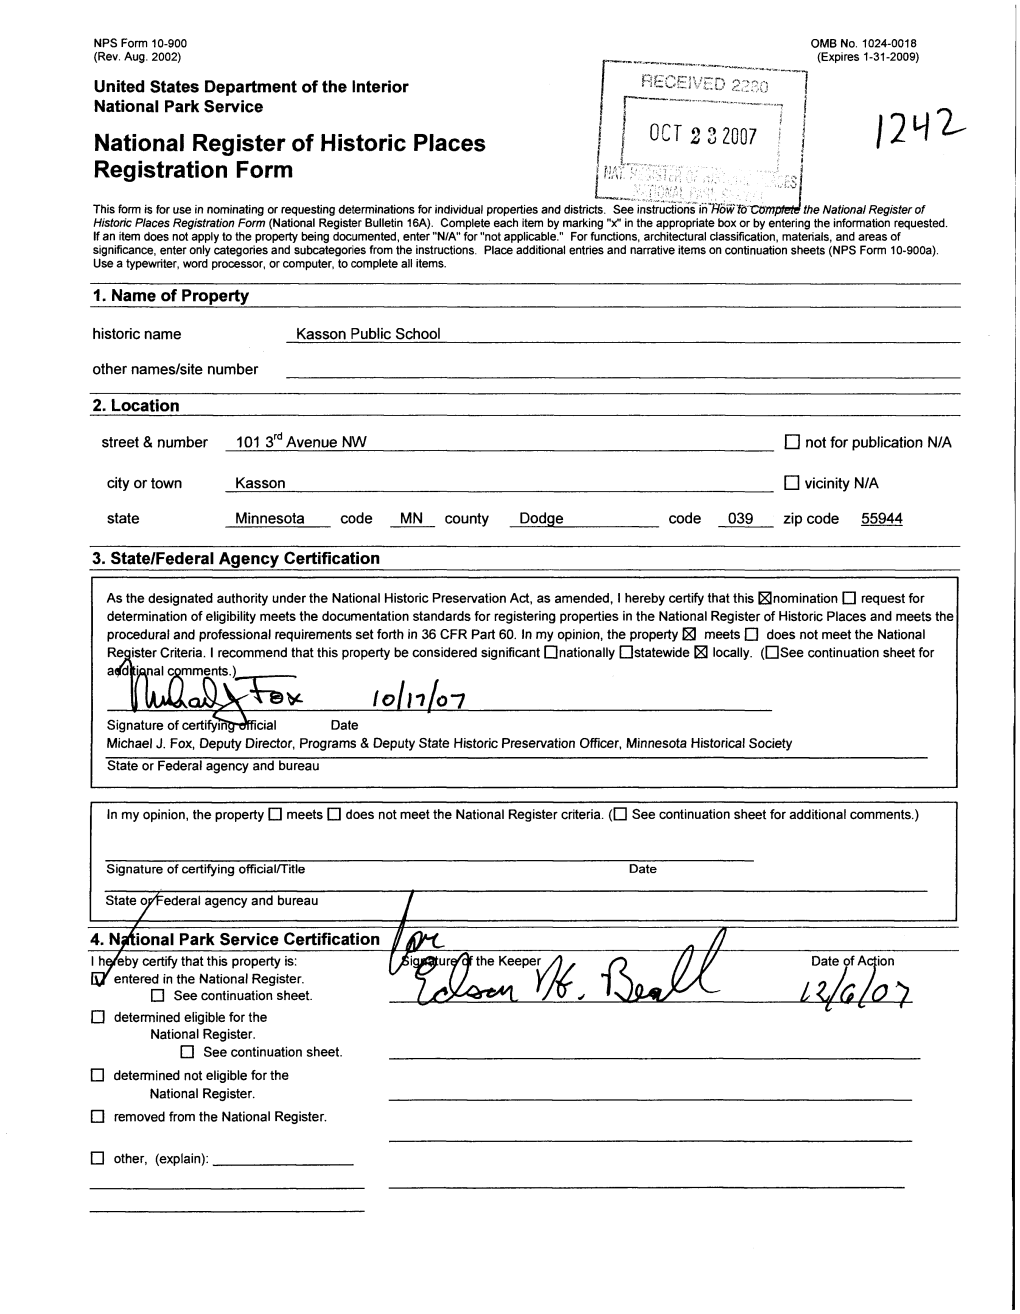 I OCT232007 | J Registration Form